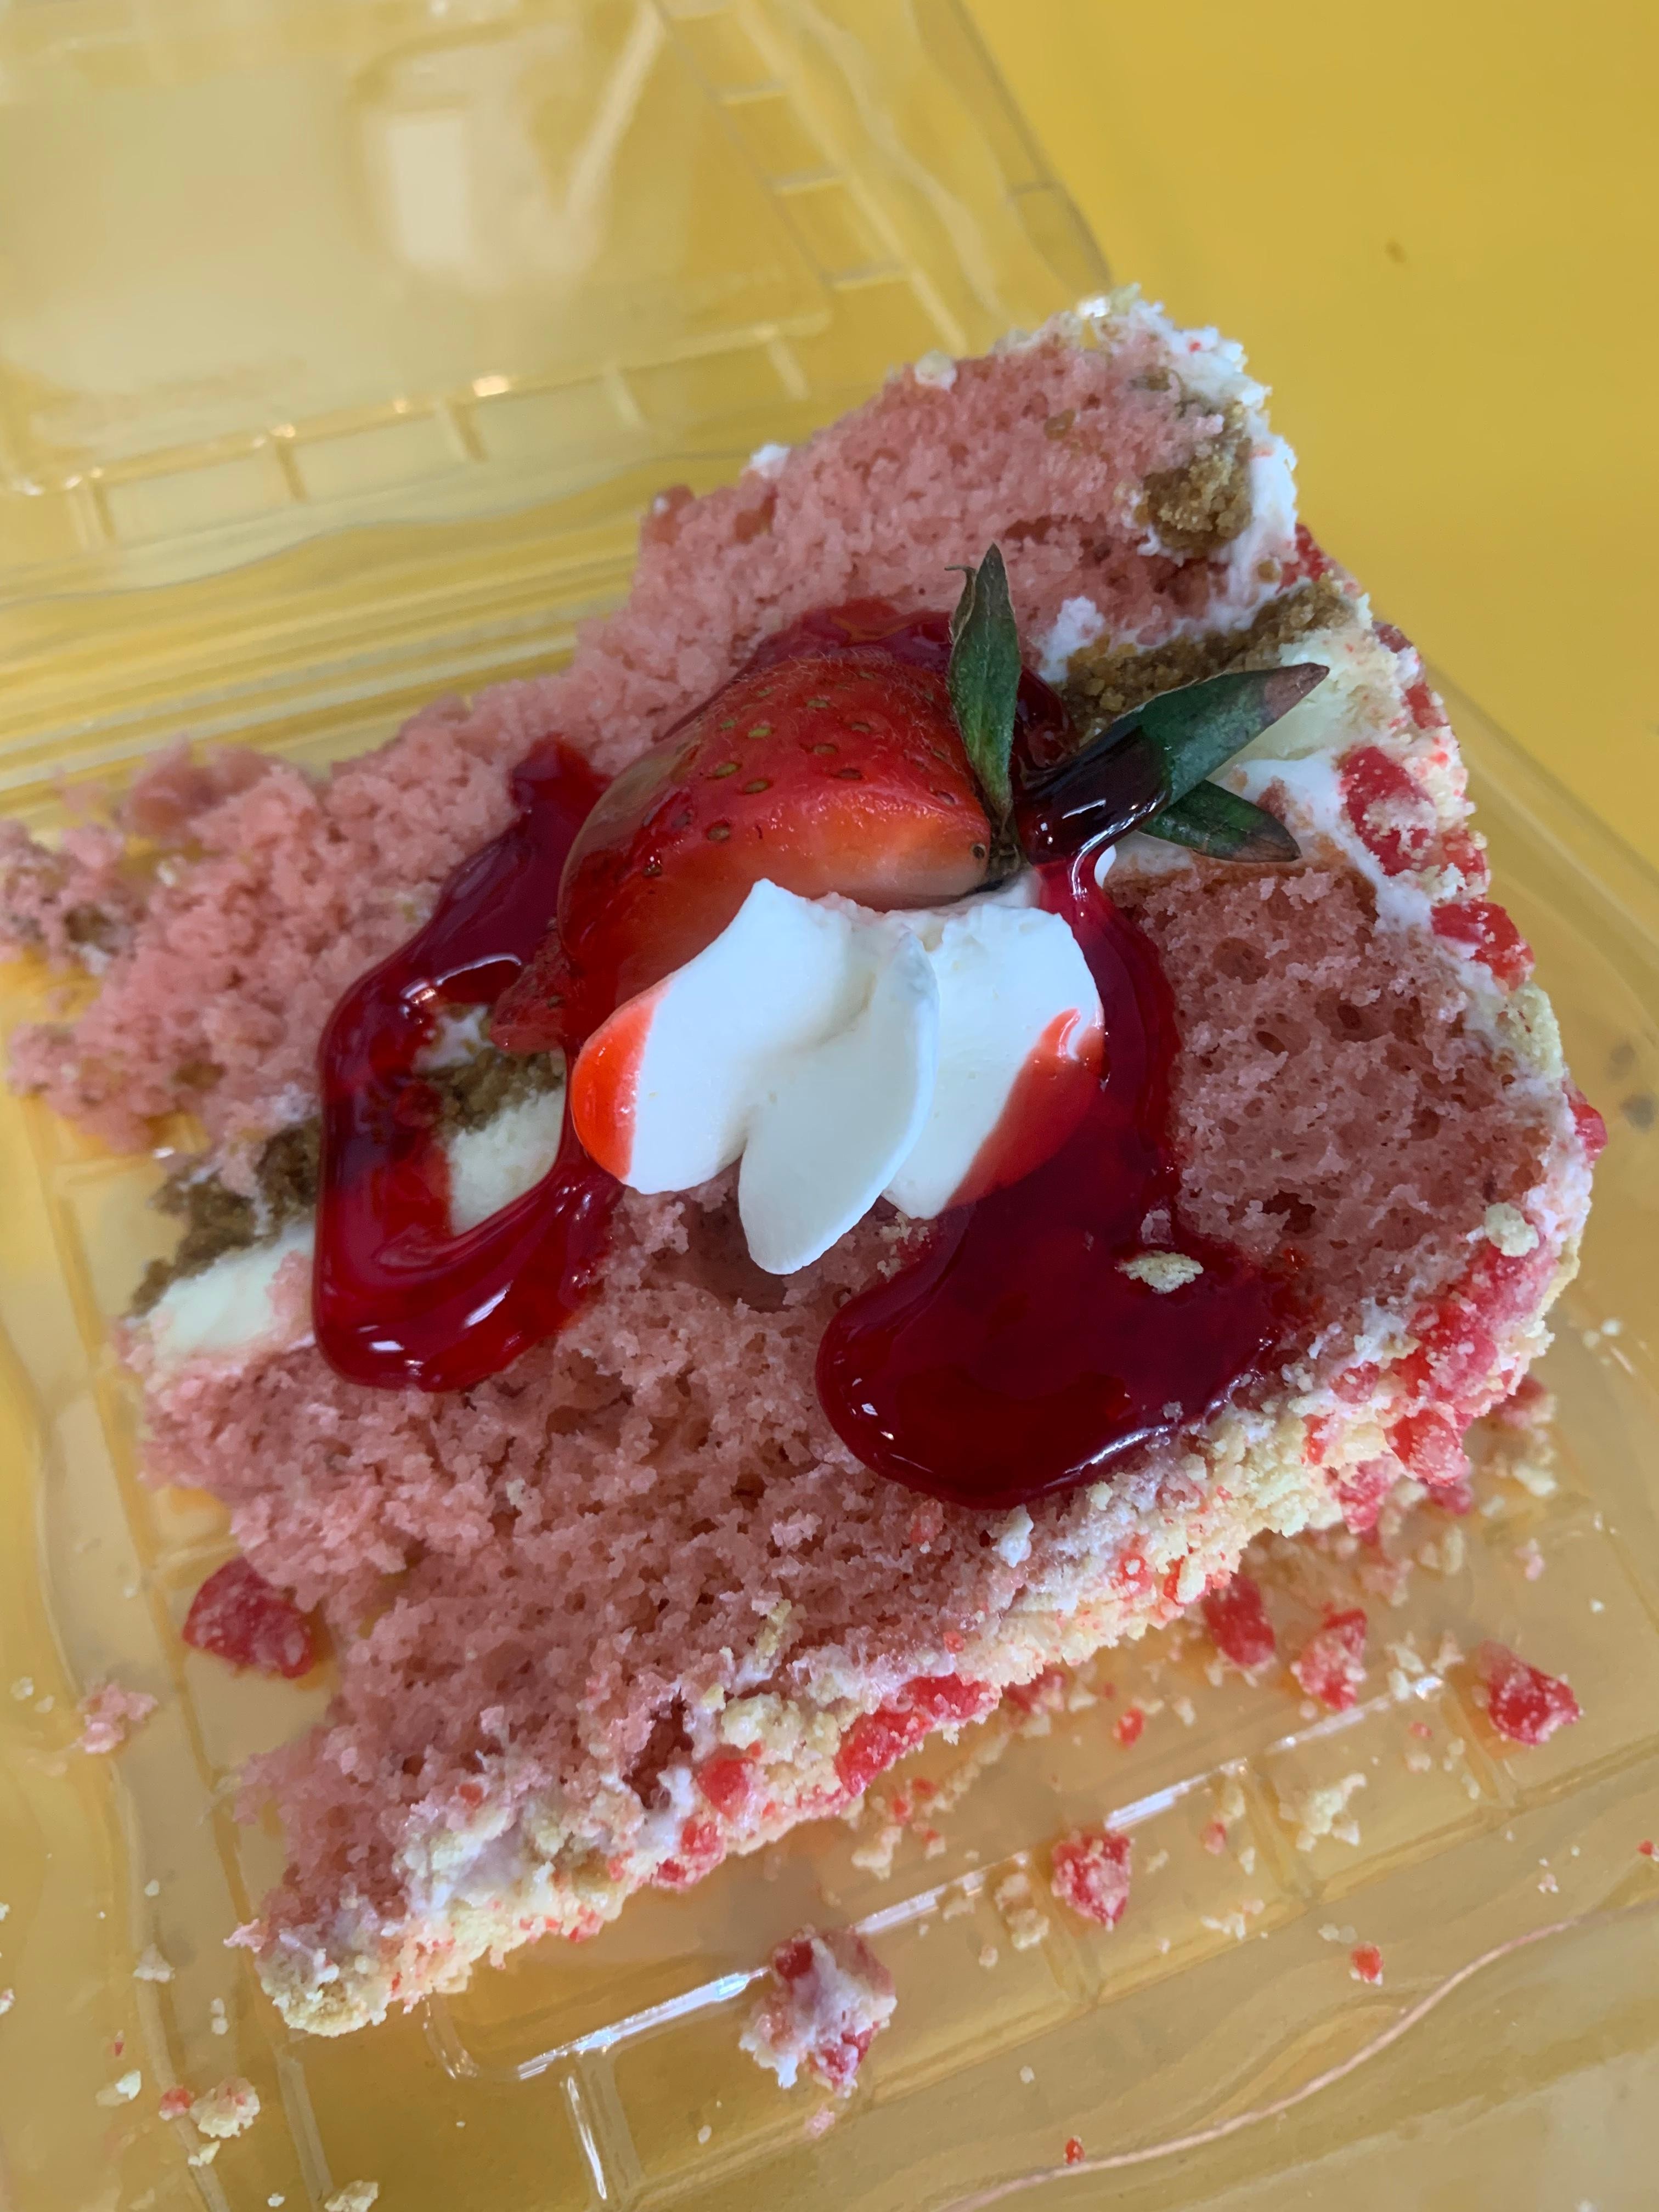 Strawberry crunch cake